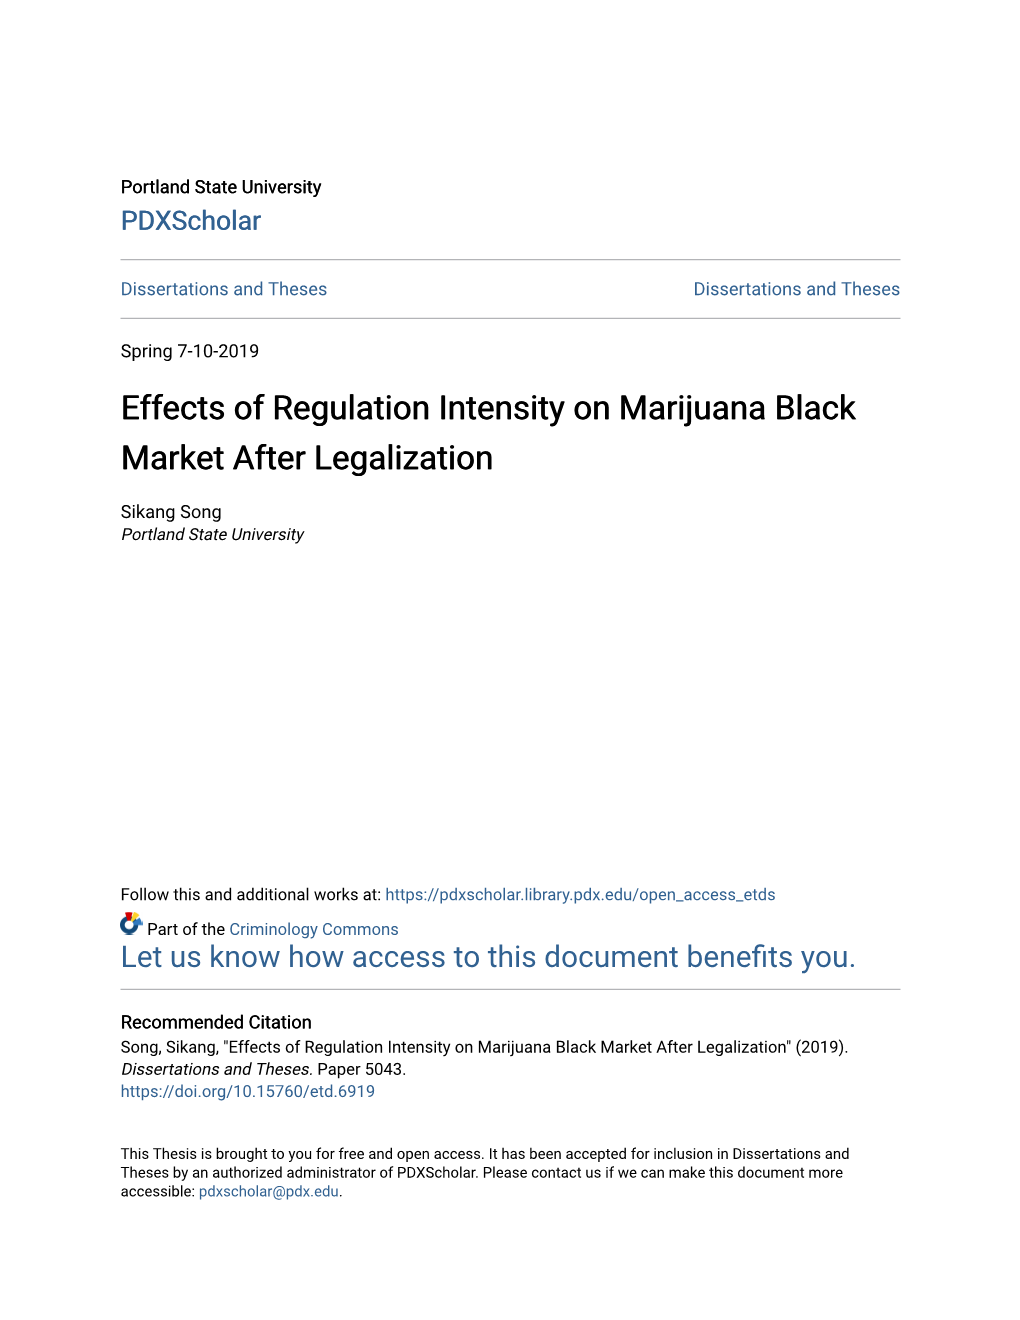 Effects of Regulation Intensity on Marijuana Black Market After Legalization